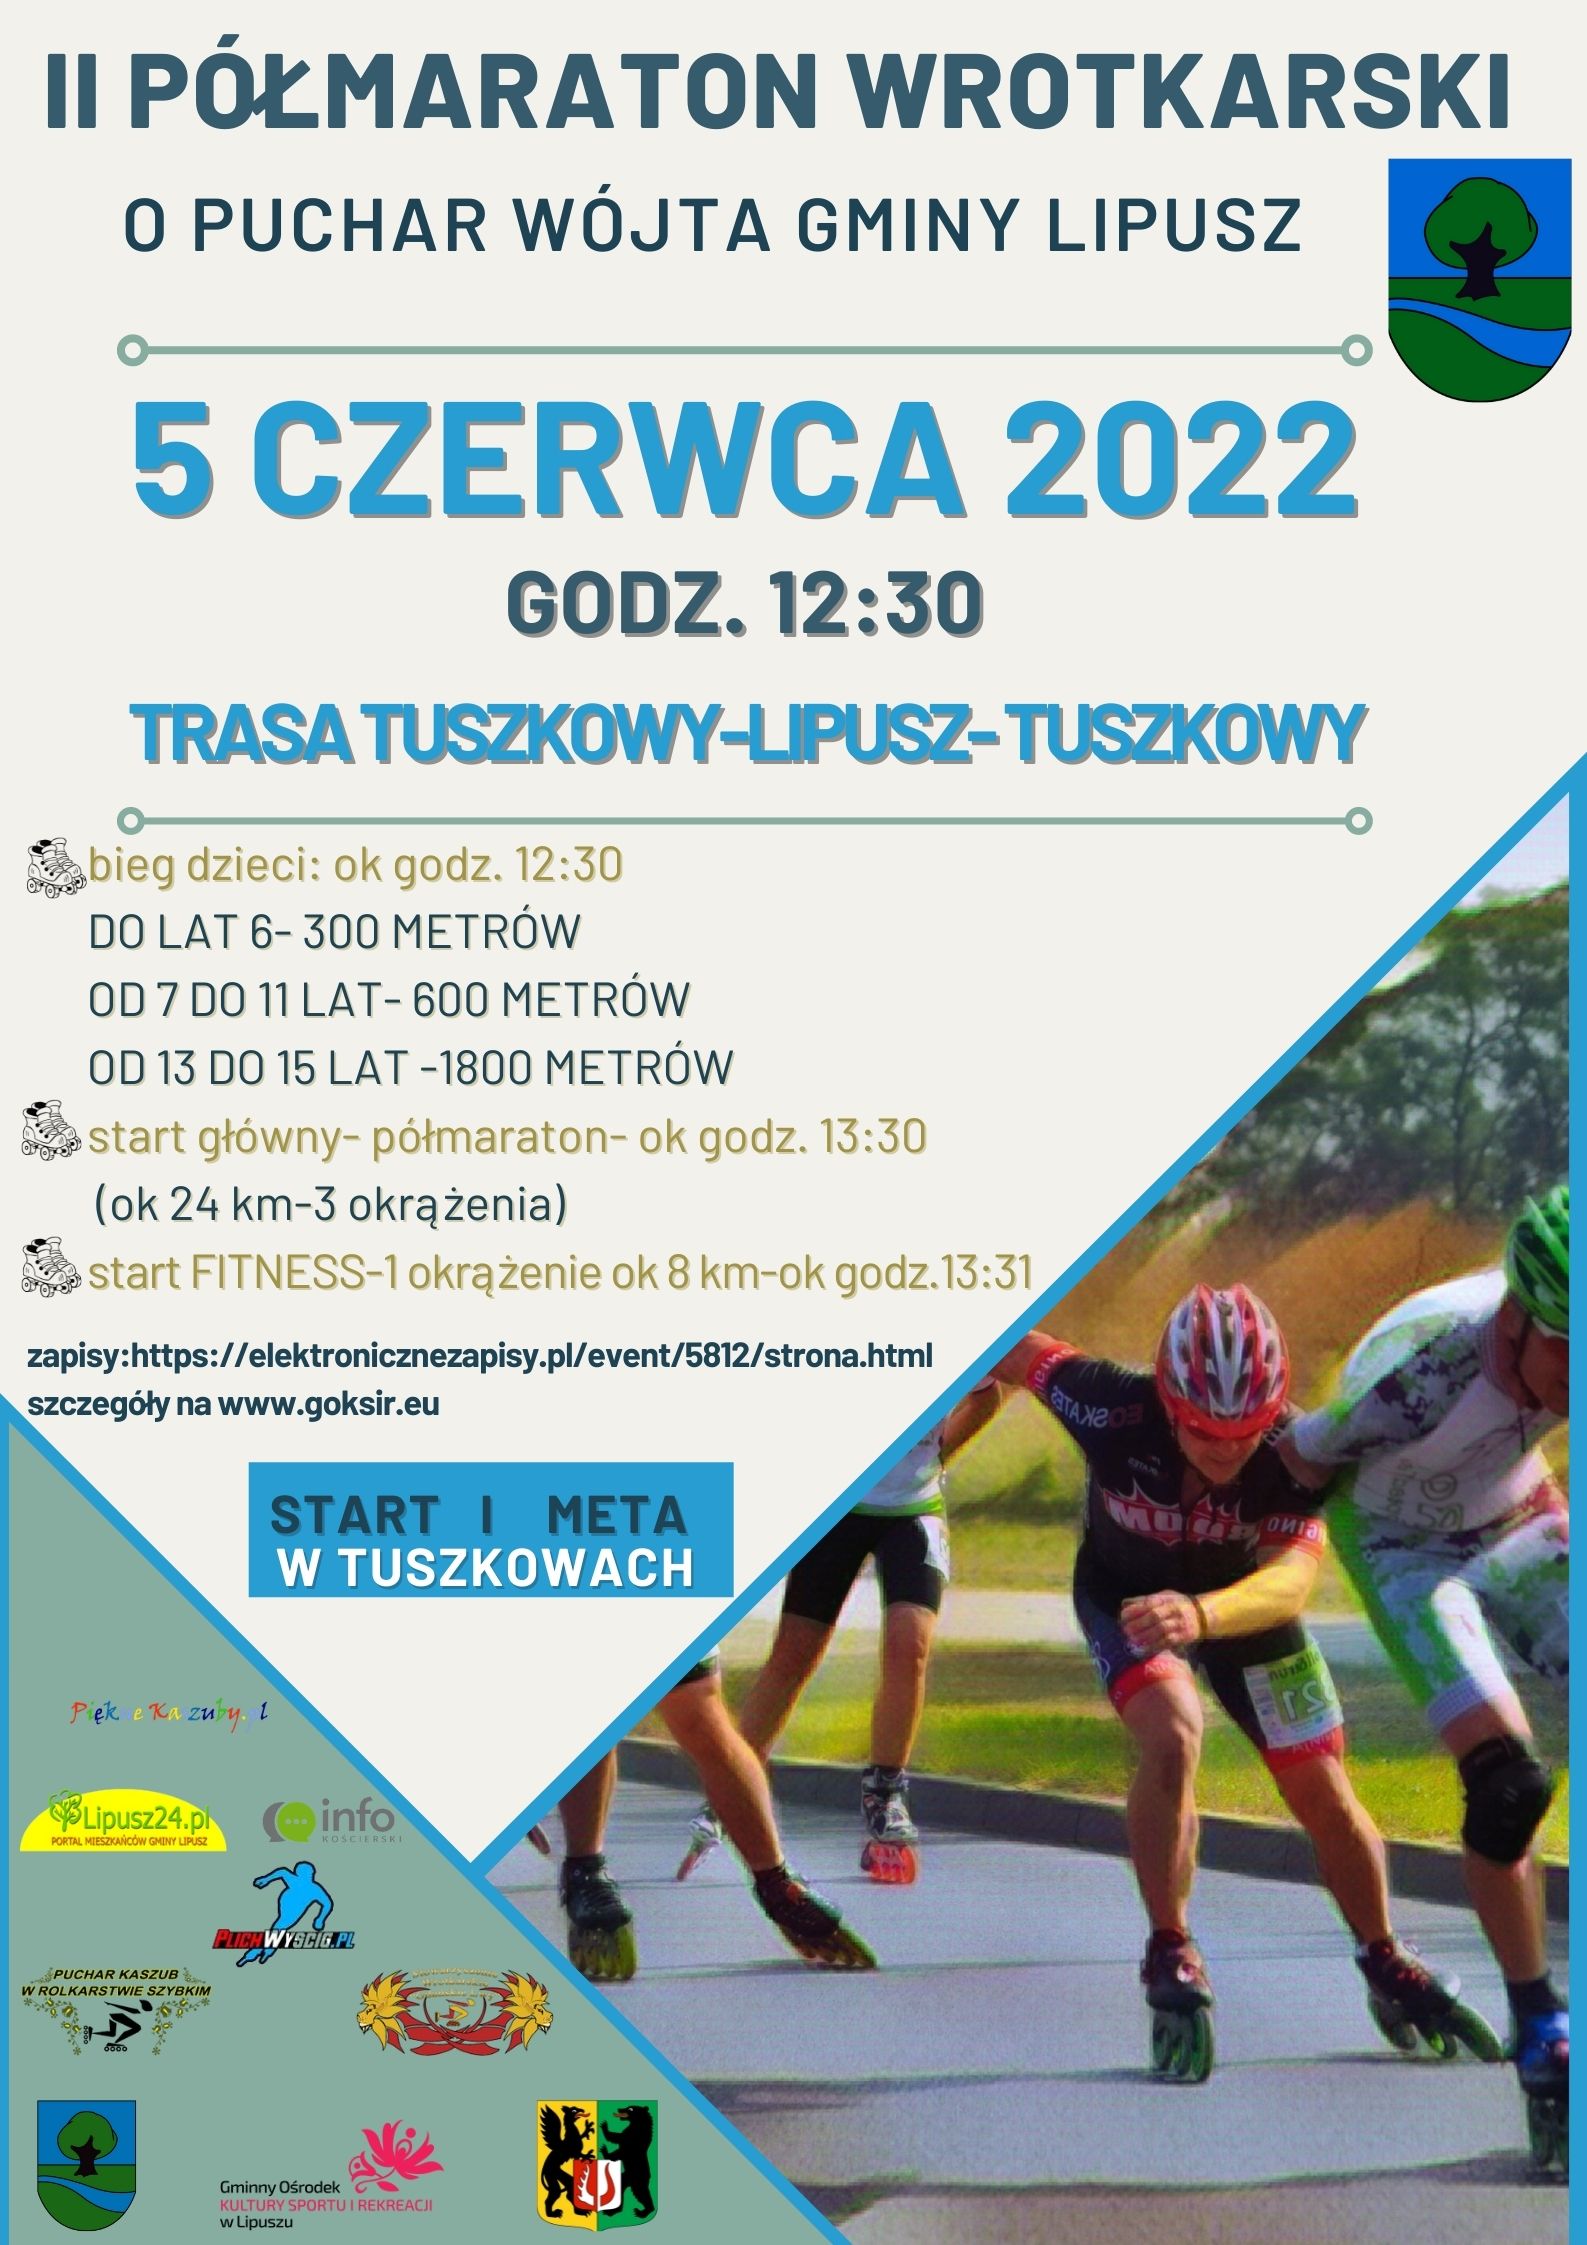 Plakat ''II Półmaraton Wrotkarski''